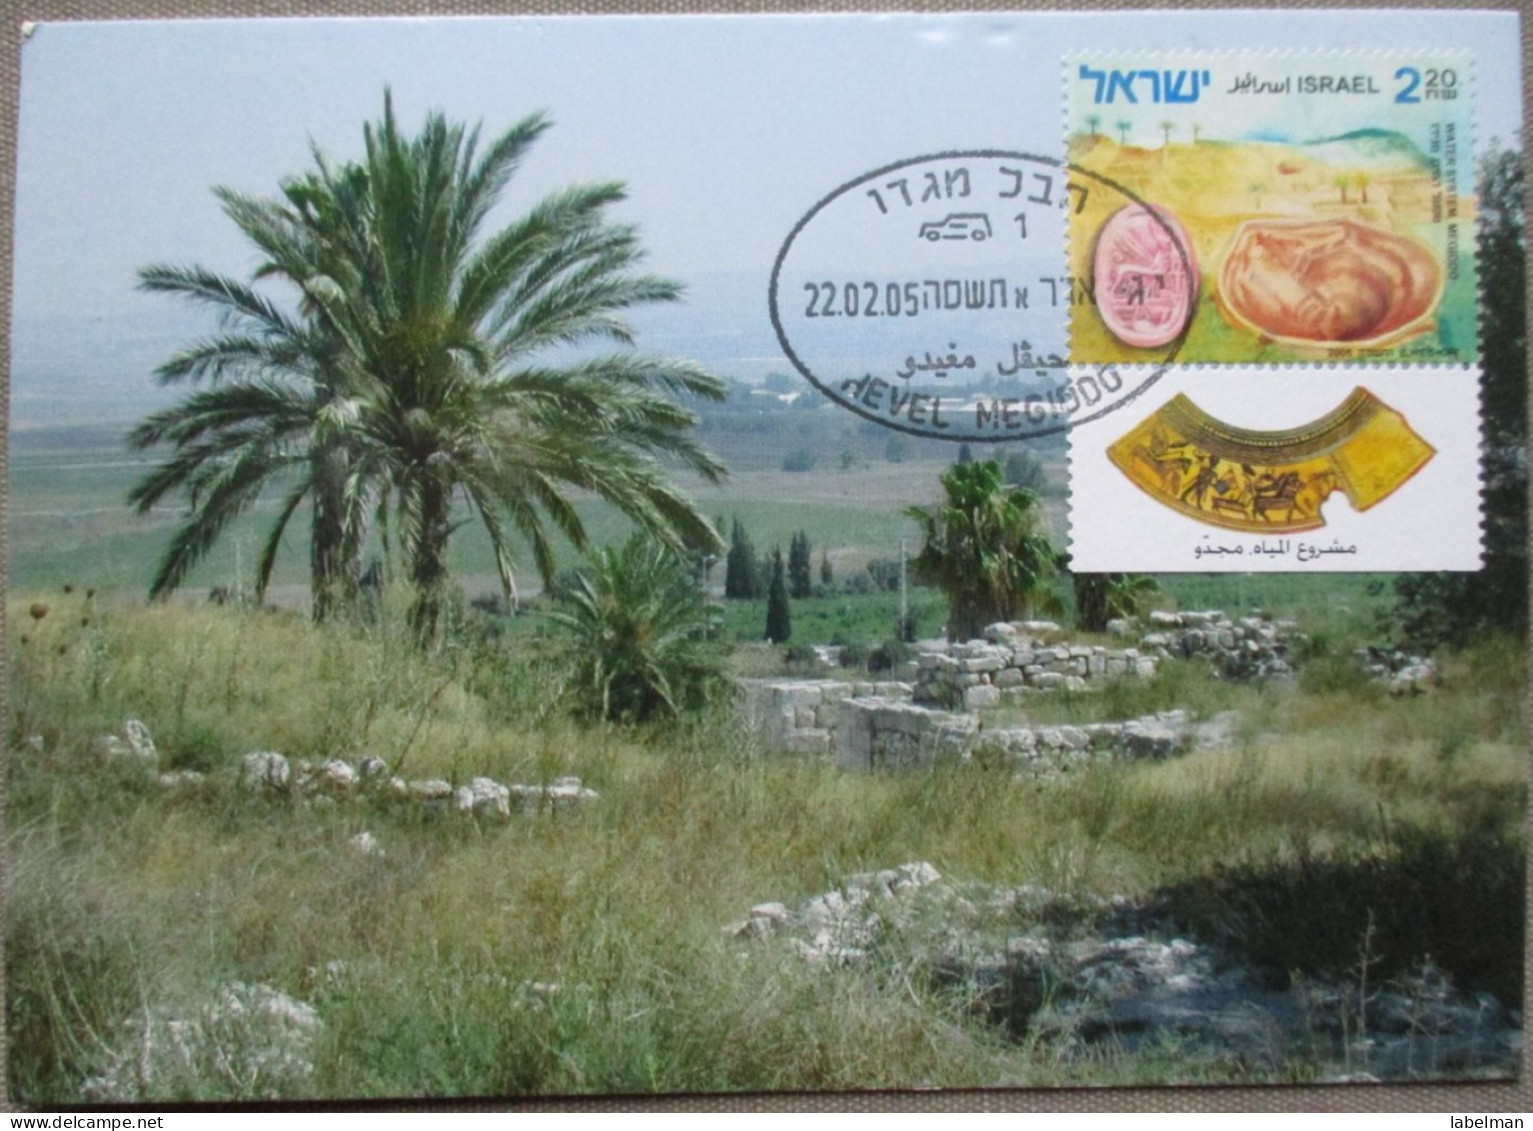 ISRAEL 2005 MAXIMUM CARD POSTCARD MEGIDDO CITY RUINS FIRST DAY OF ISSUE CARTOLINA CARTE POSTALE POSTKARTE CARTOLINA - Cartes-maximum